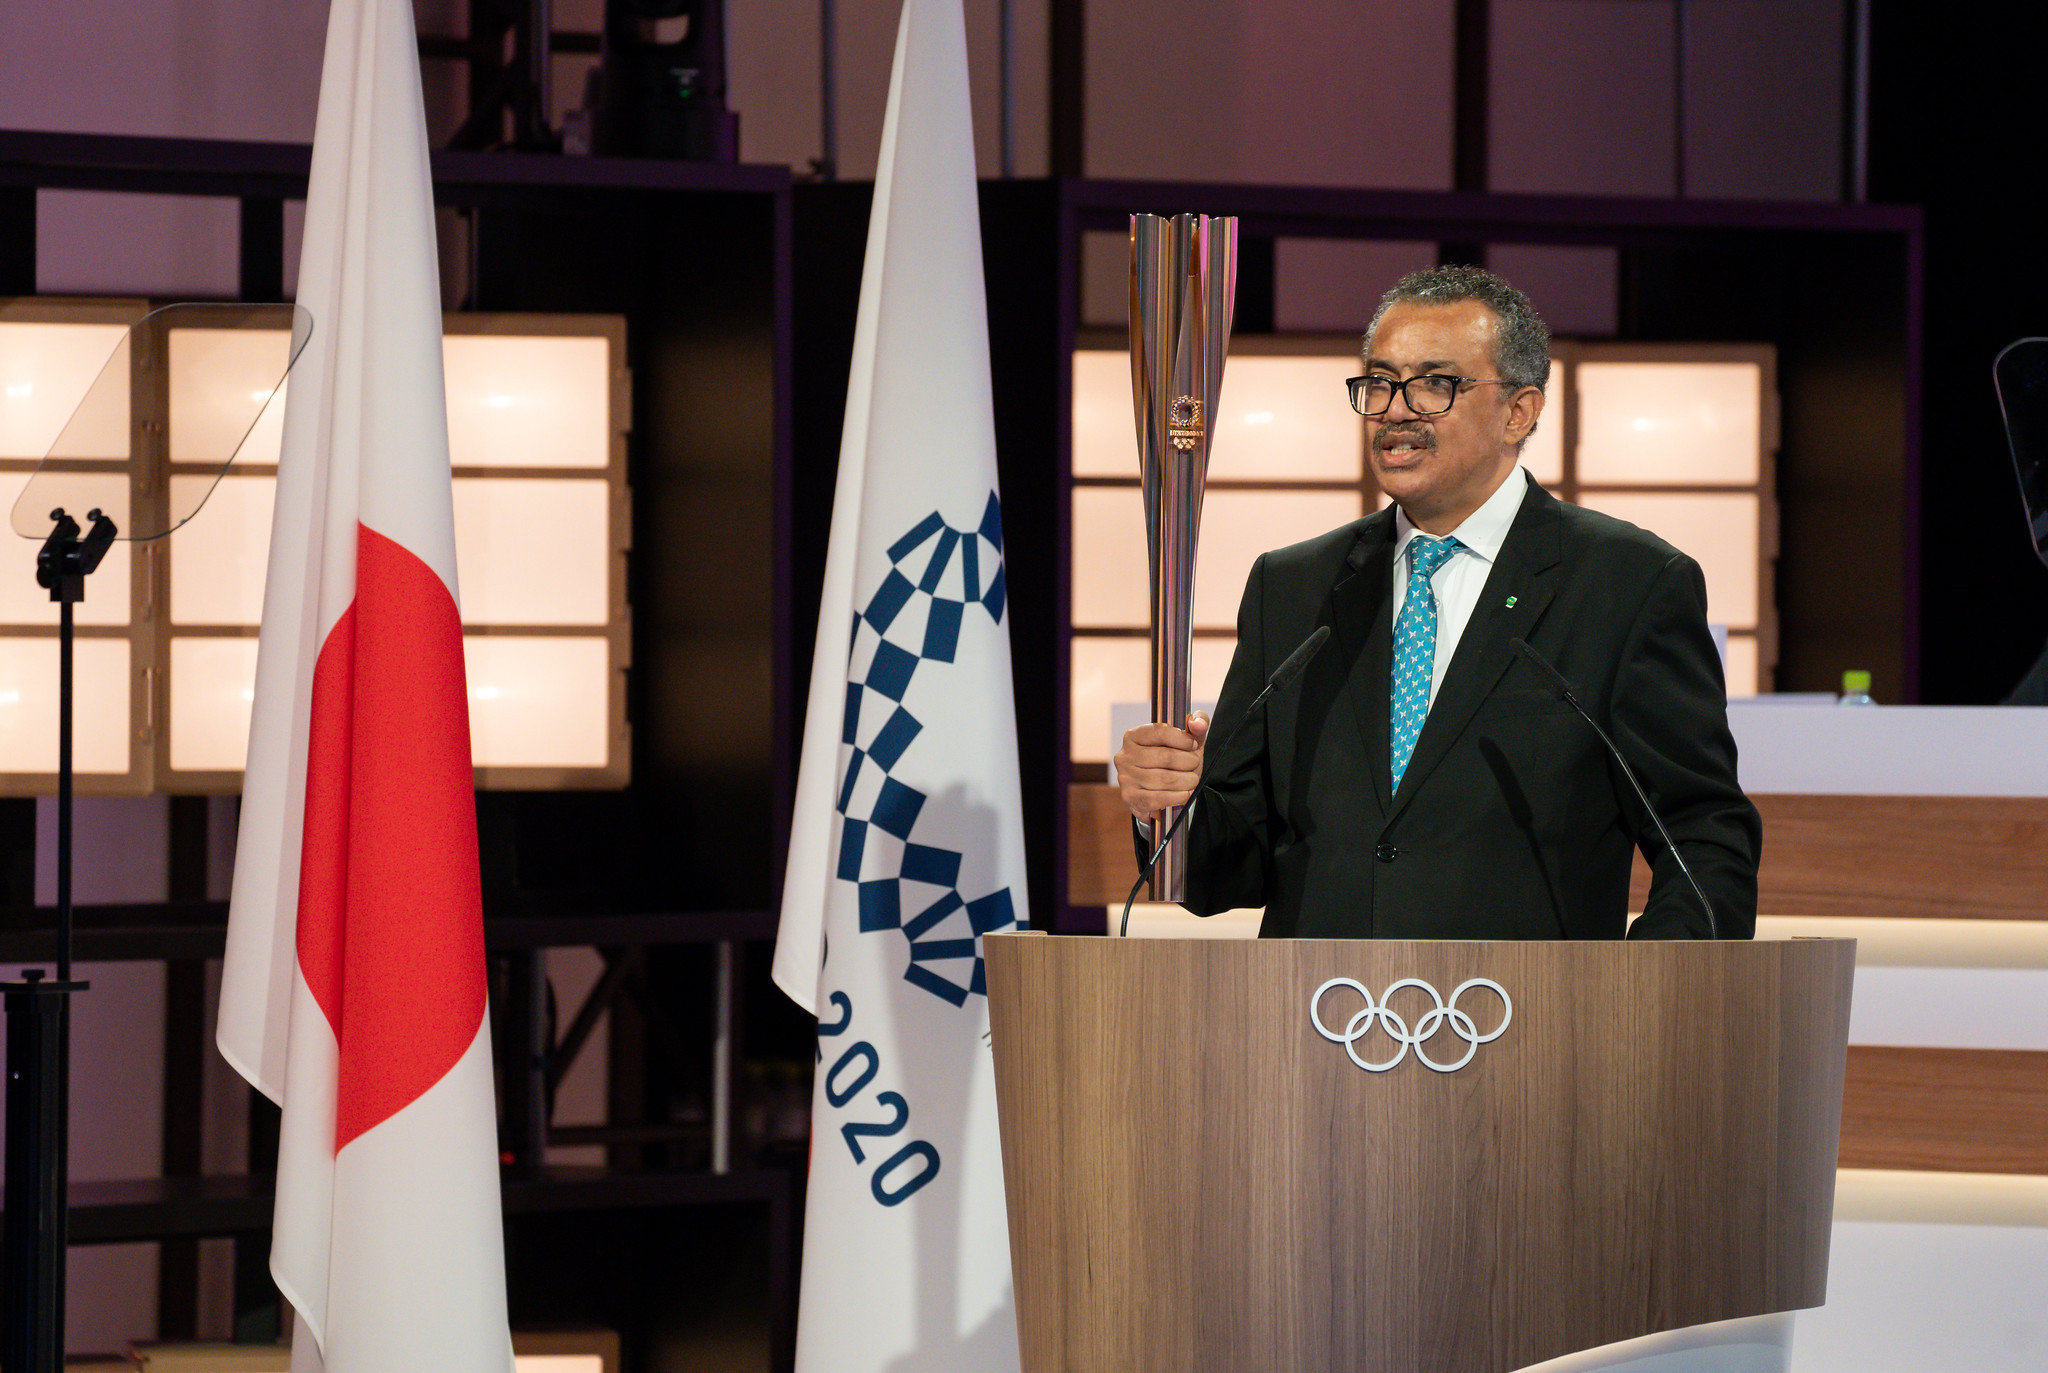 World Health Organization director general Tedros Adhanom gave a keynote speech to open the day ©IOC